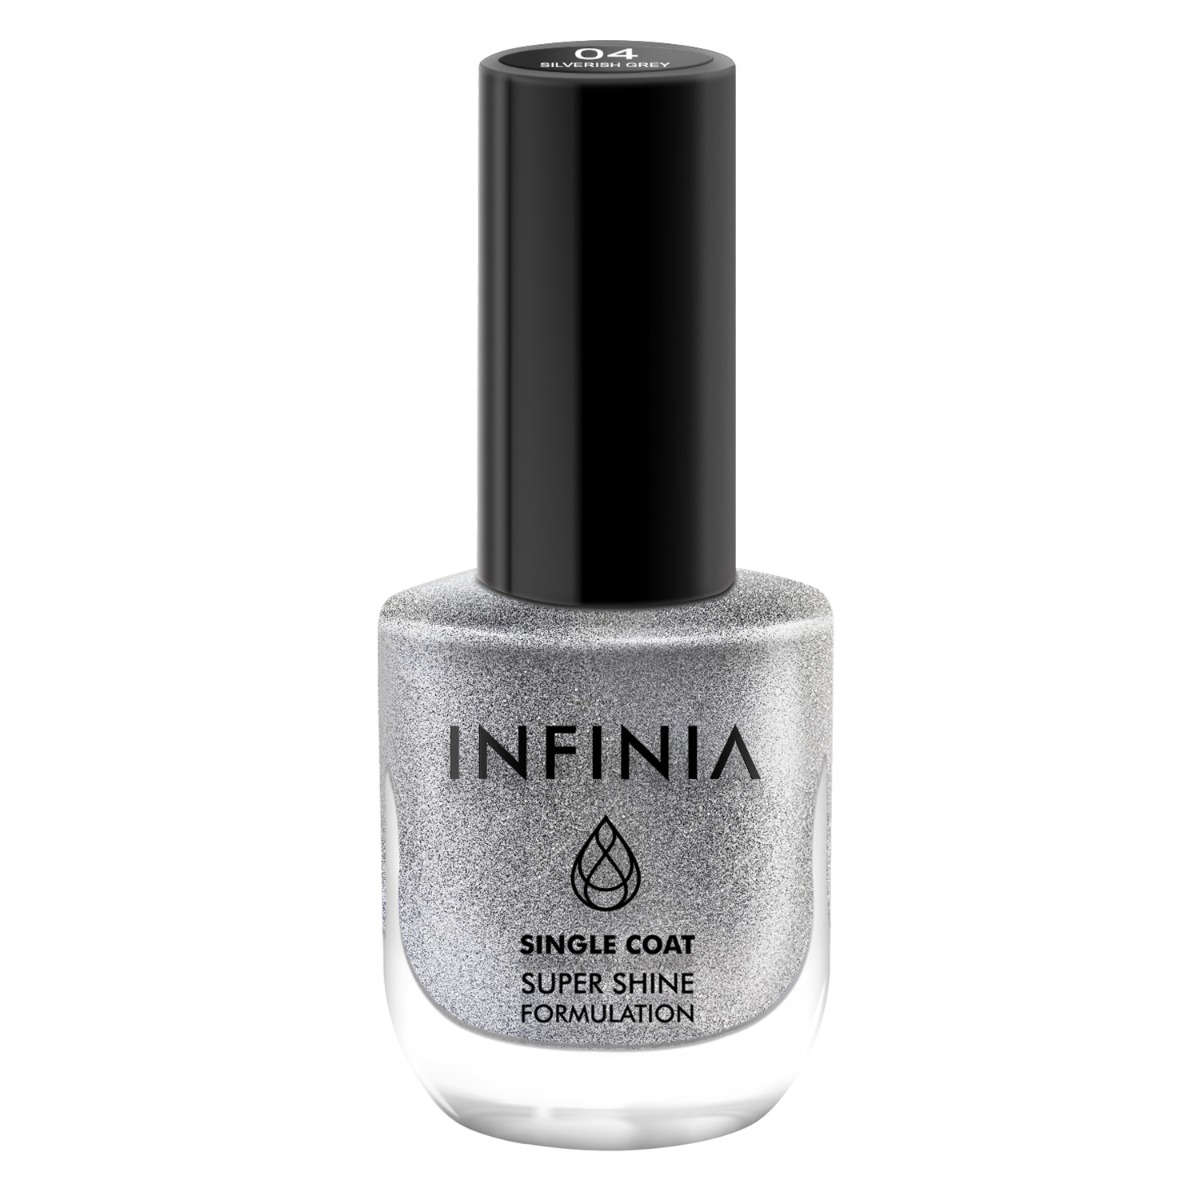 INFINIA Single Coat Super Shine Nail Polish With Ultra High Gloss, 12ml-004 Silverish Grey